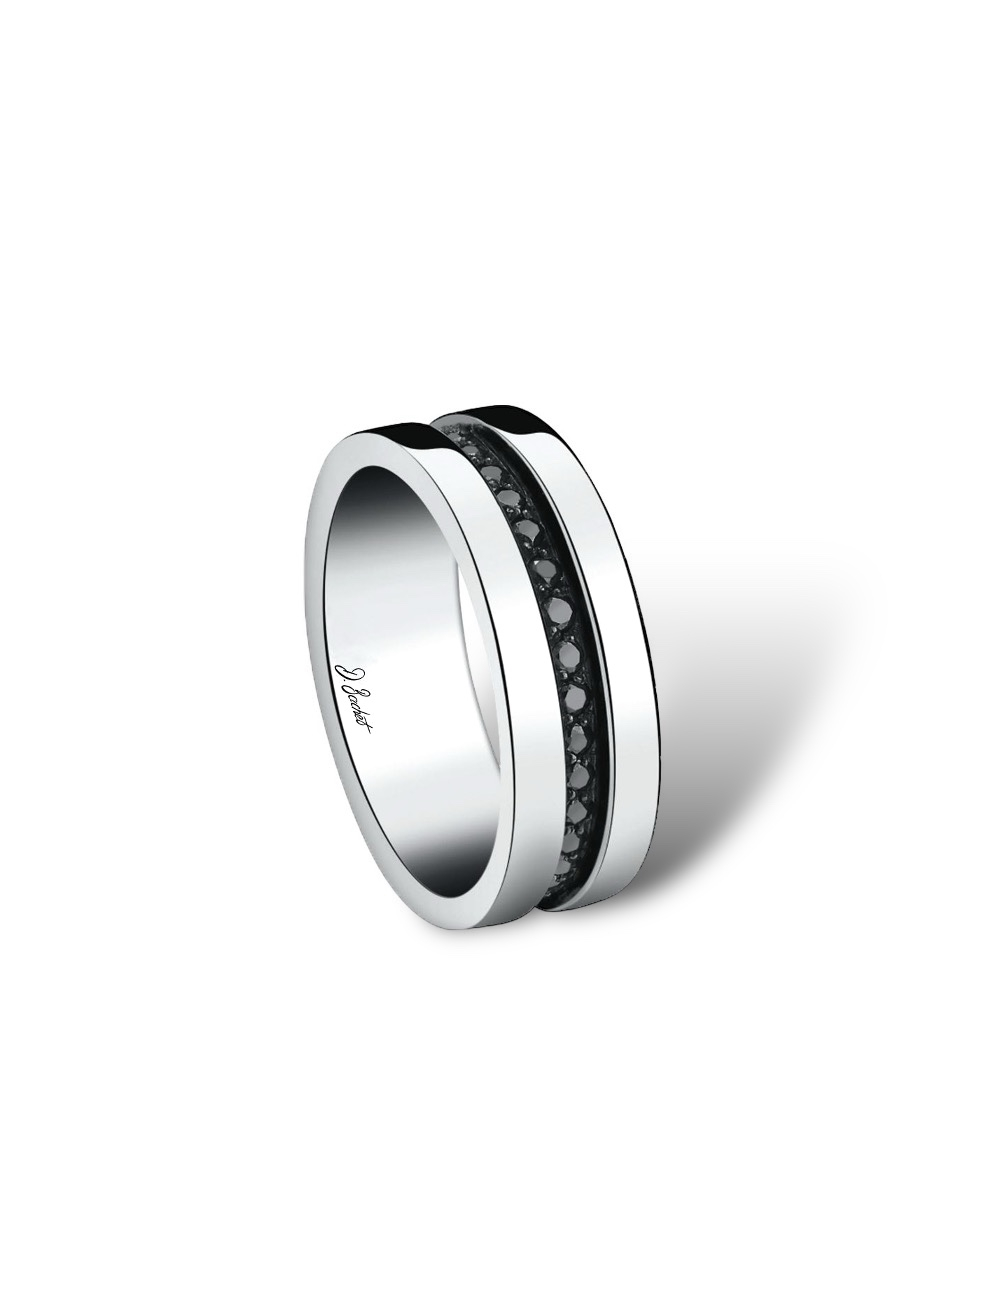 7 mm men's wedding band in platinum with black diamonds, contemporary masculine design, comfort fit, also in white diamonds.